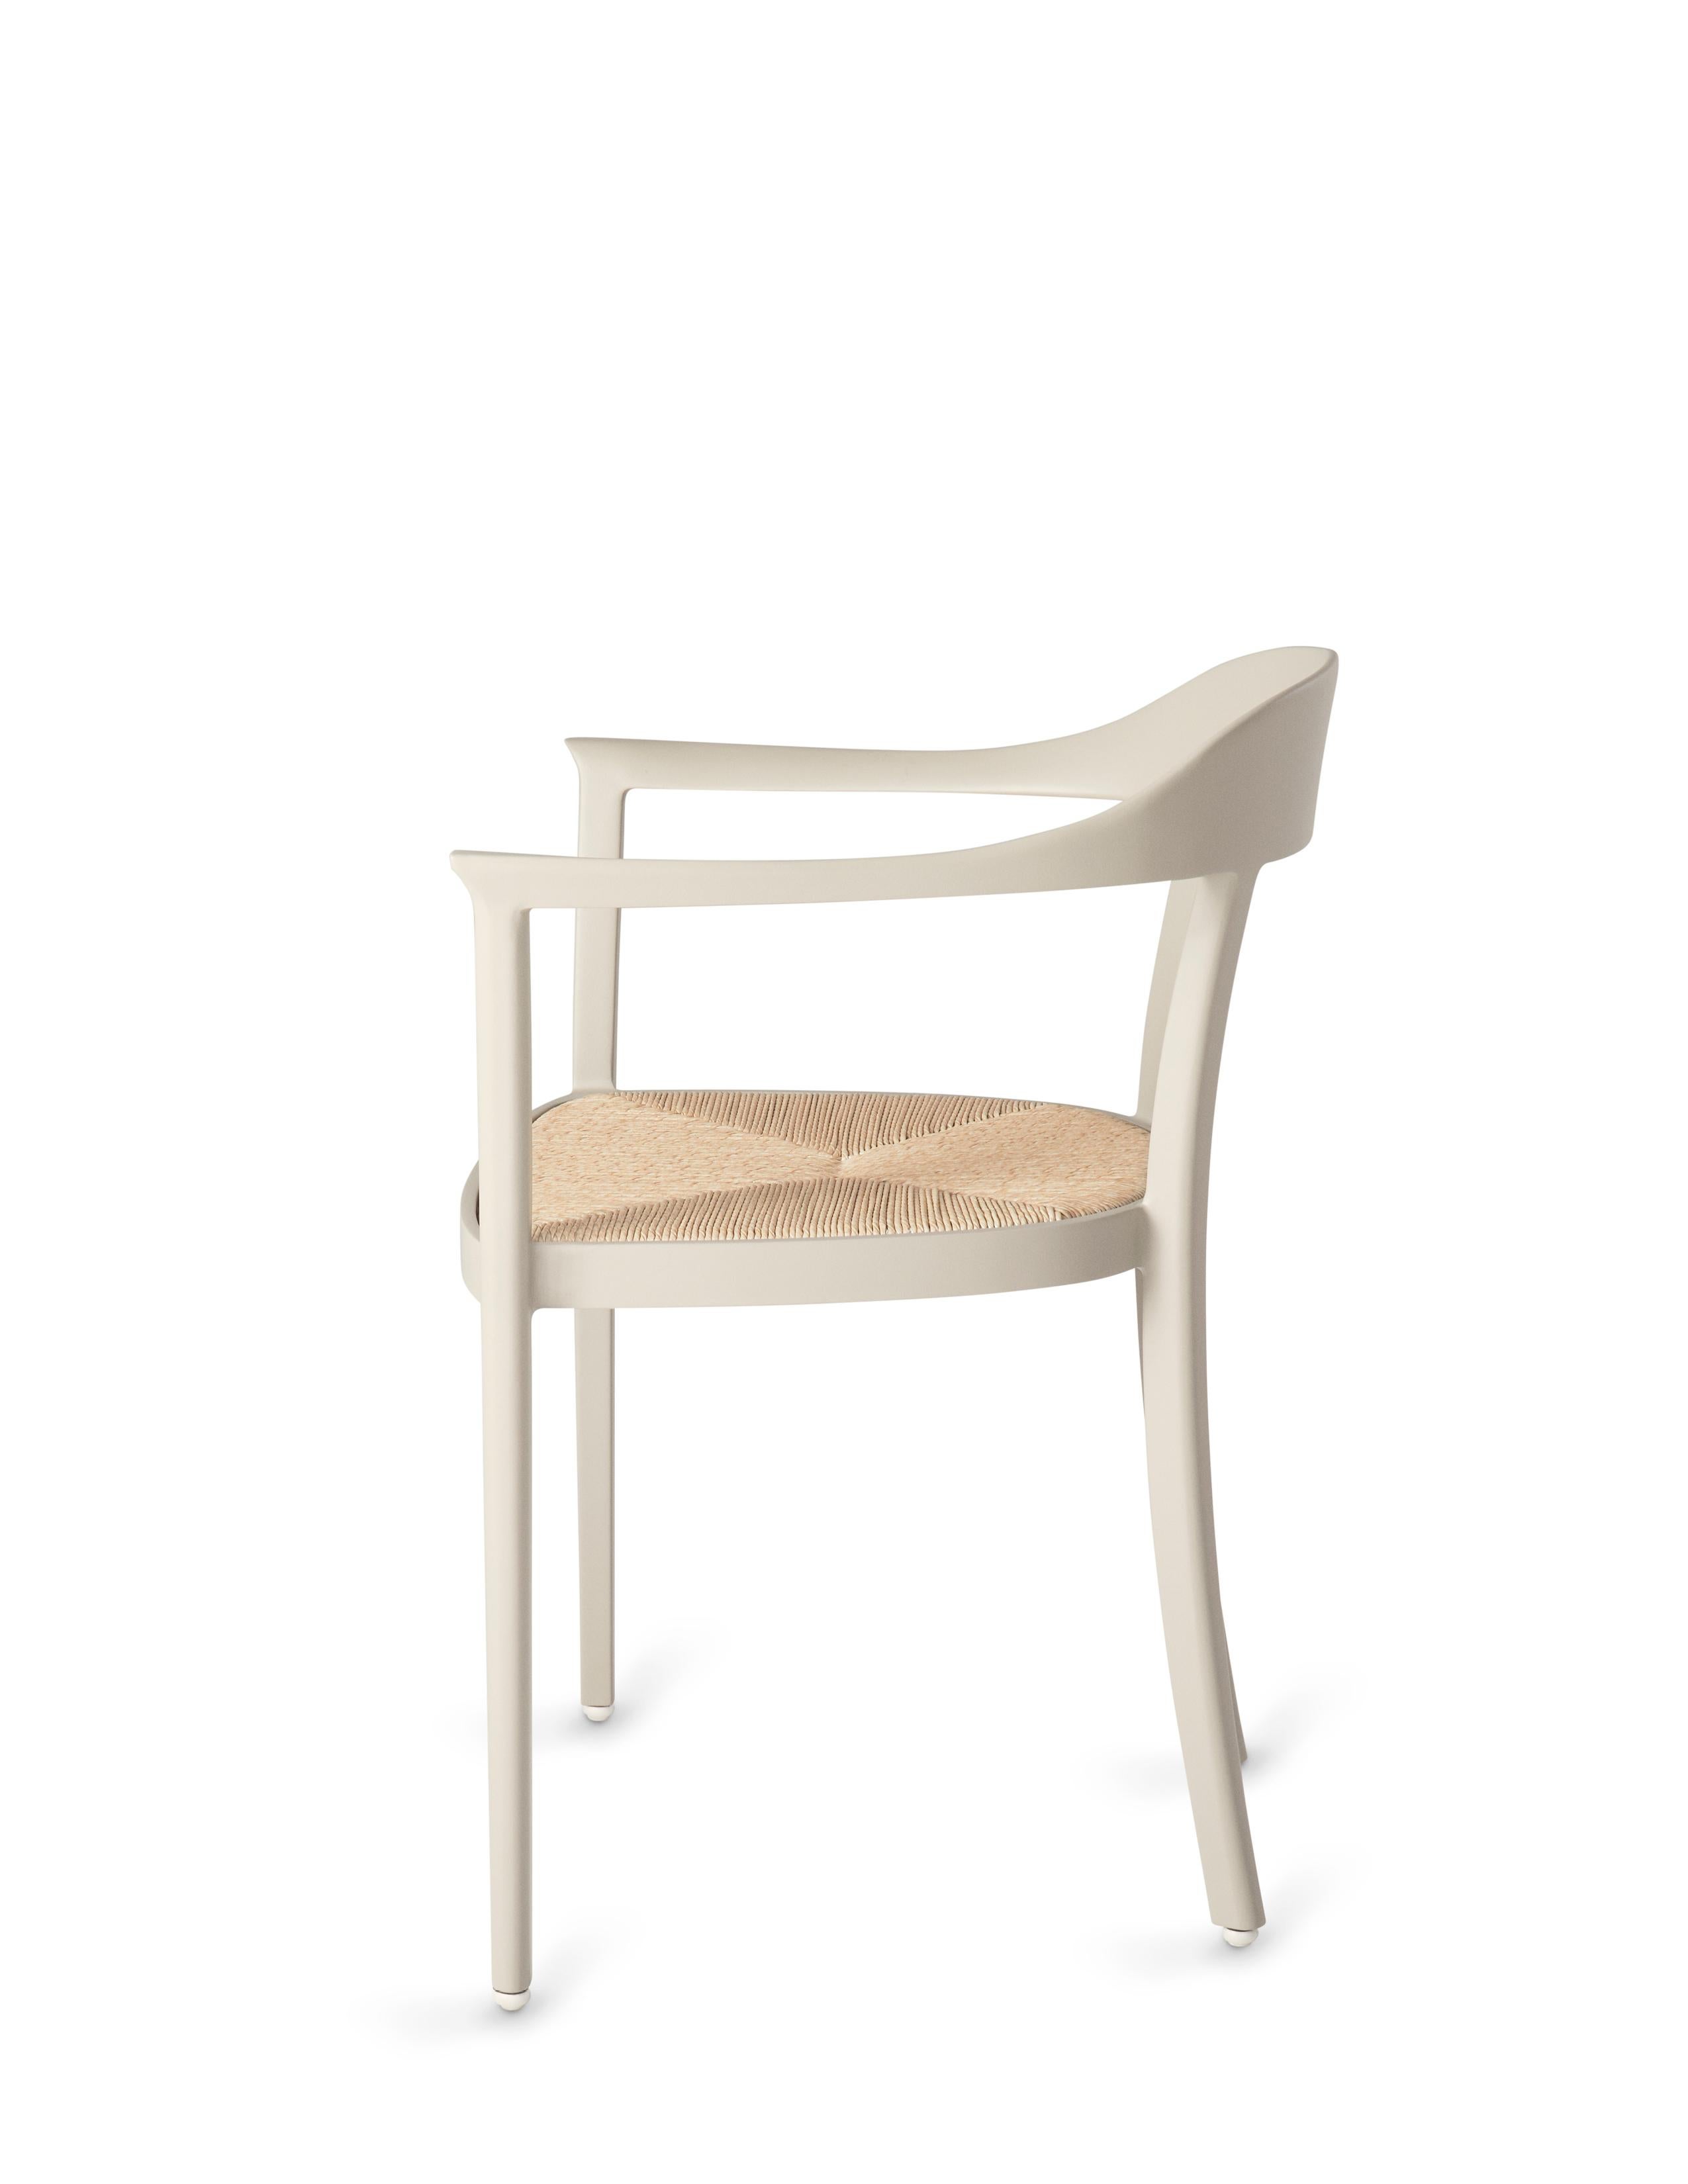 Aluminum Chesapeake Dining Chair, Classic White, Woven Rush, Outdoor Garden Furniture